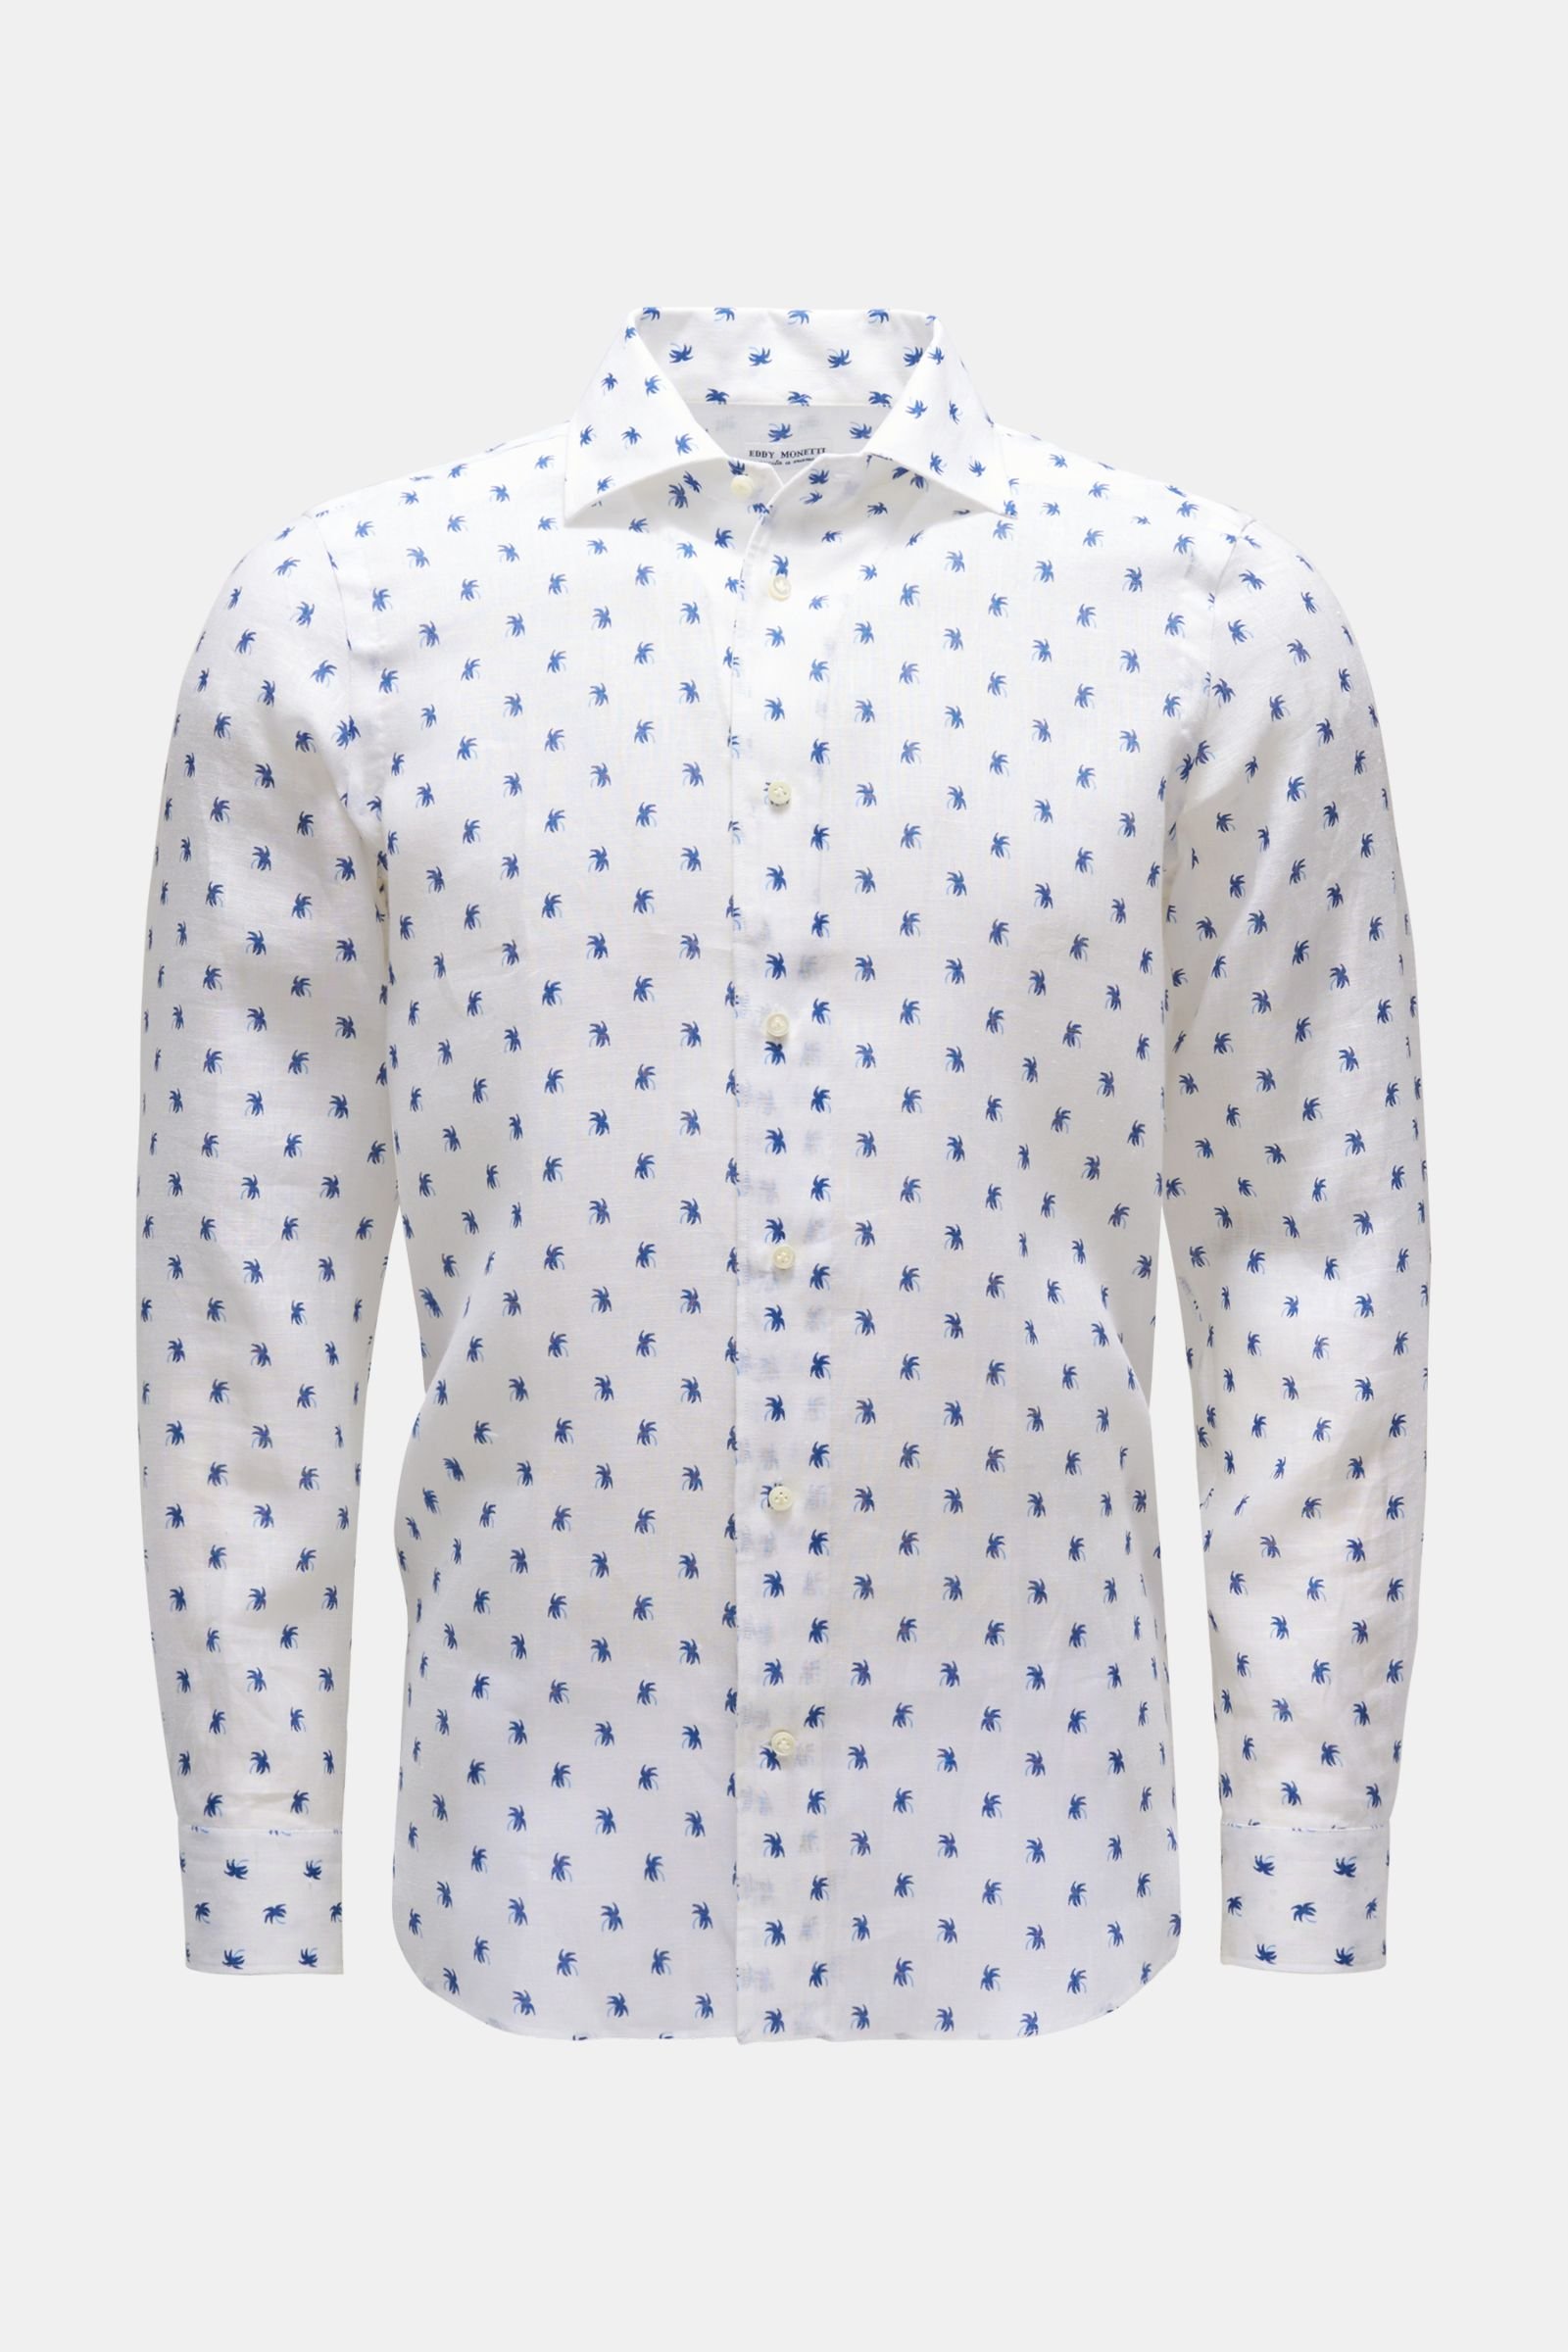 Linen shirt Kent collar white/navy patterned